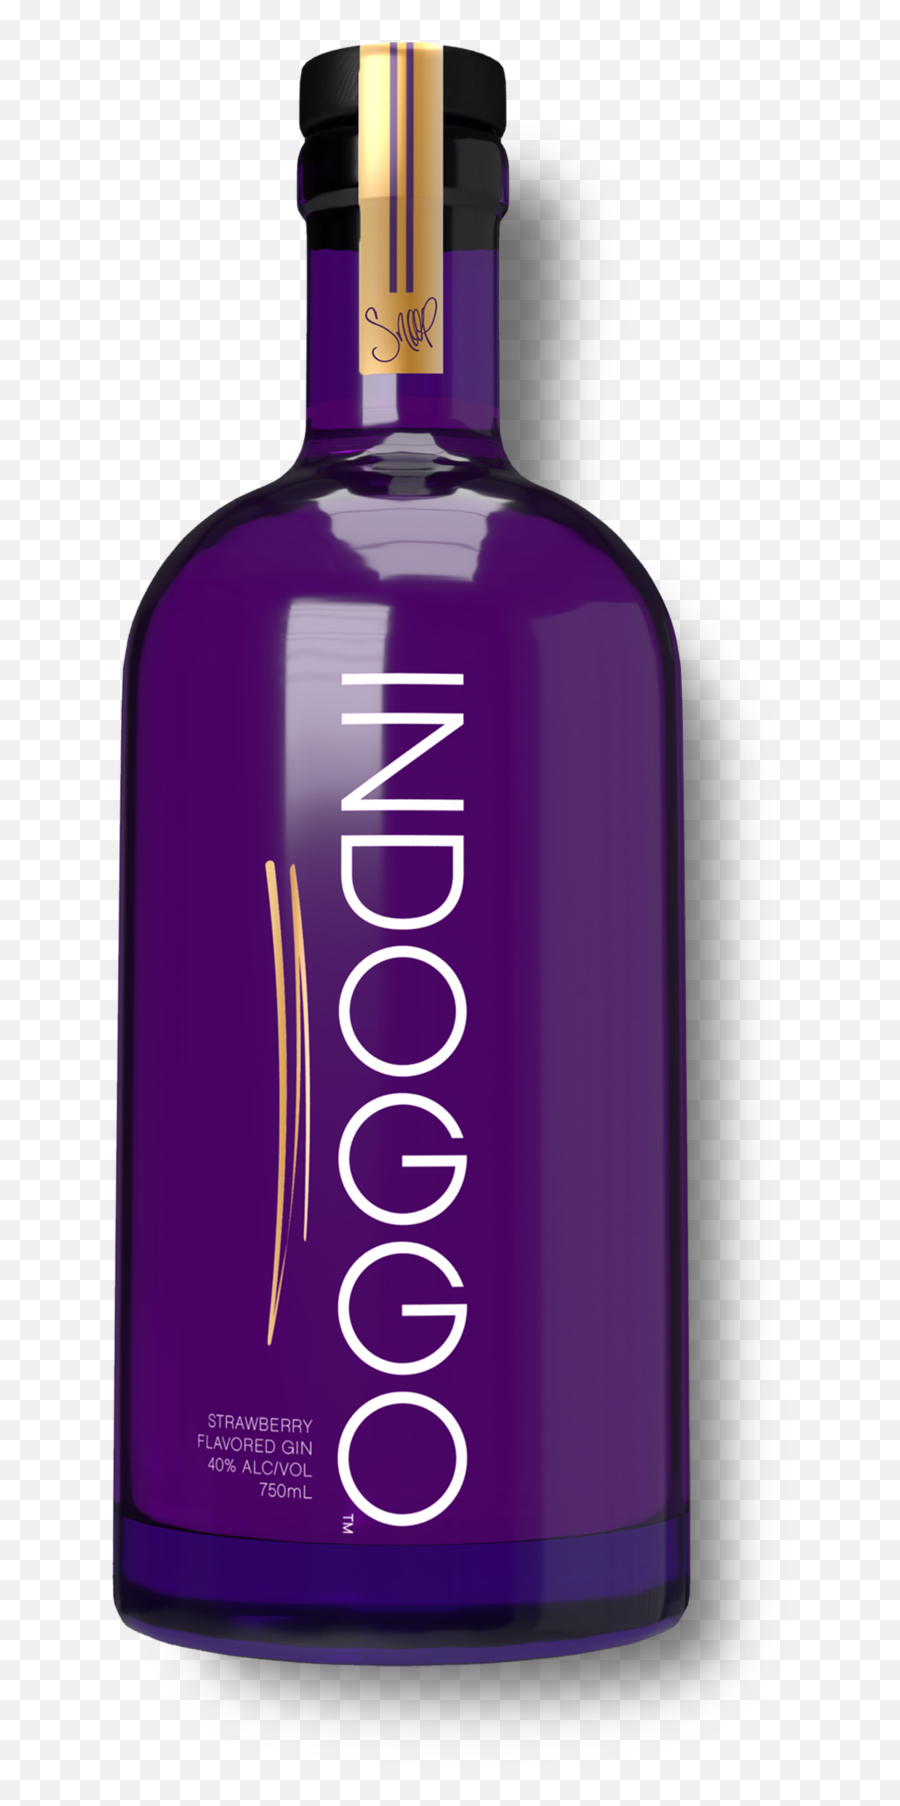 Snoop Dogg Indoggo Strawberry Flavored Gin - Indoggo Gin Png,Transparent Snoop Dogg